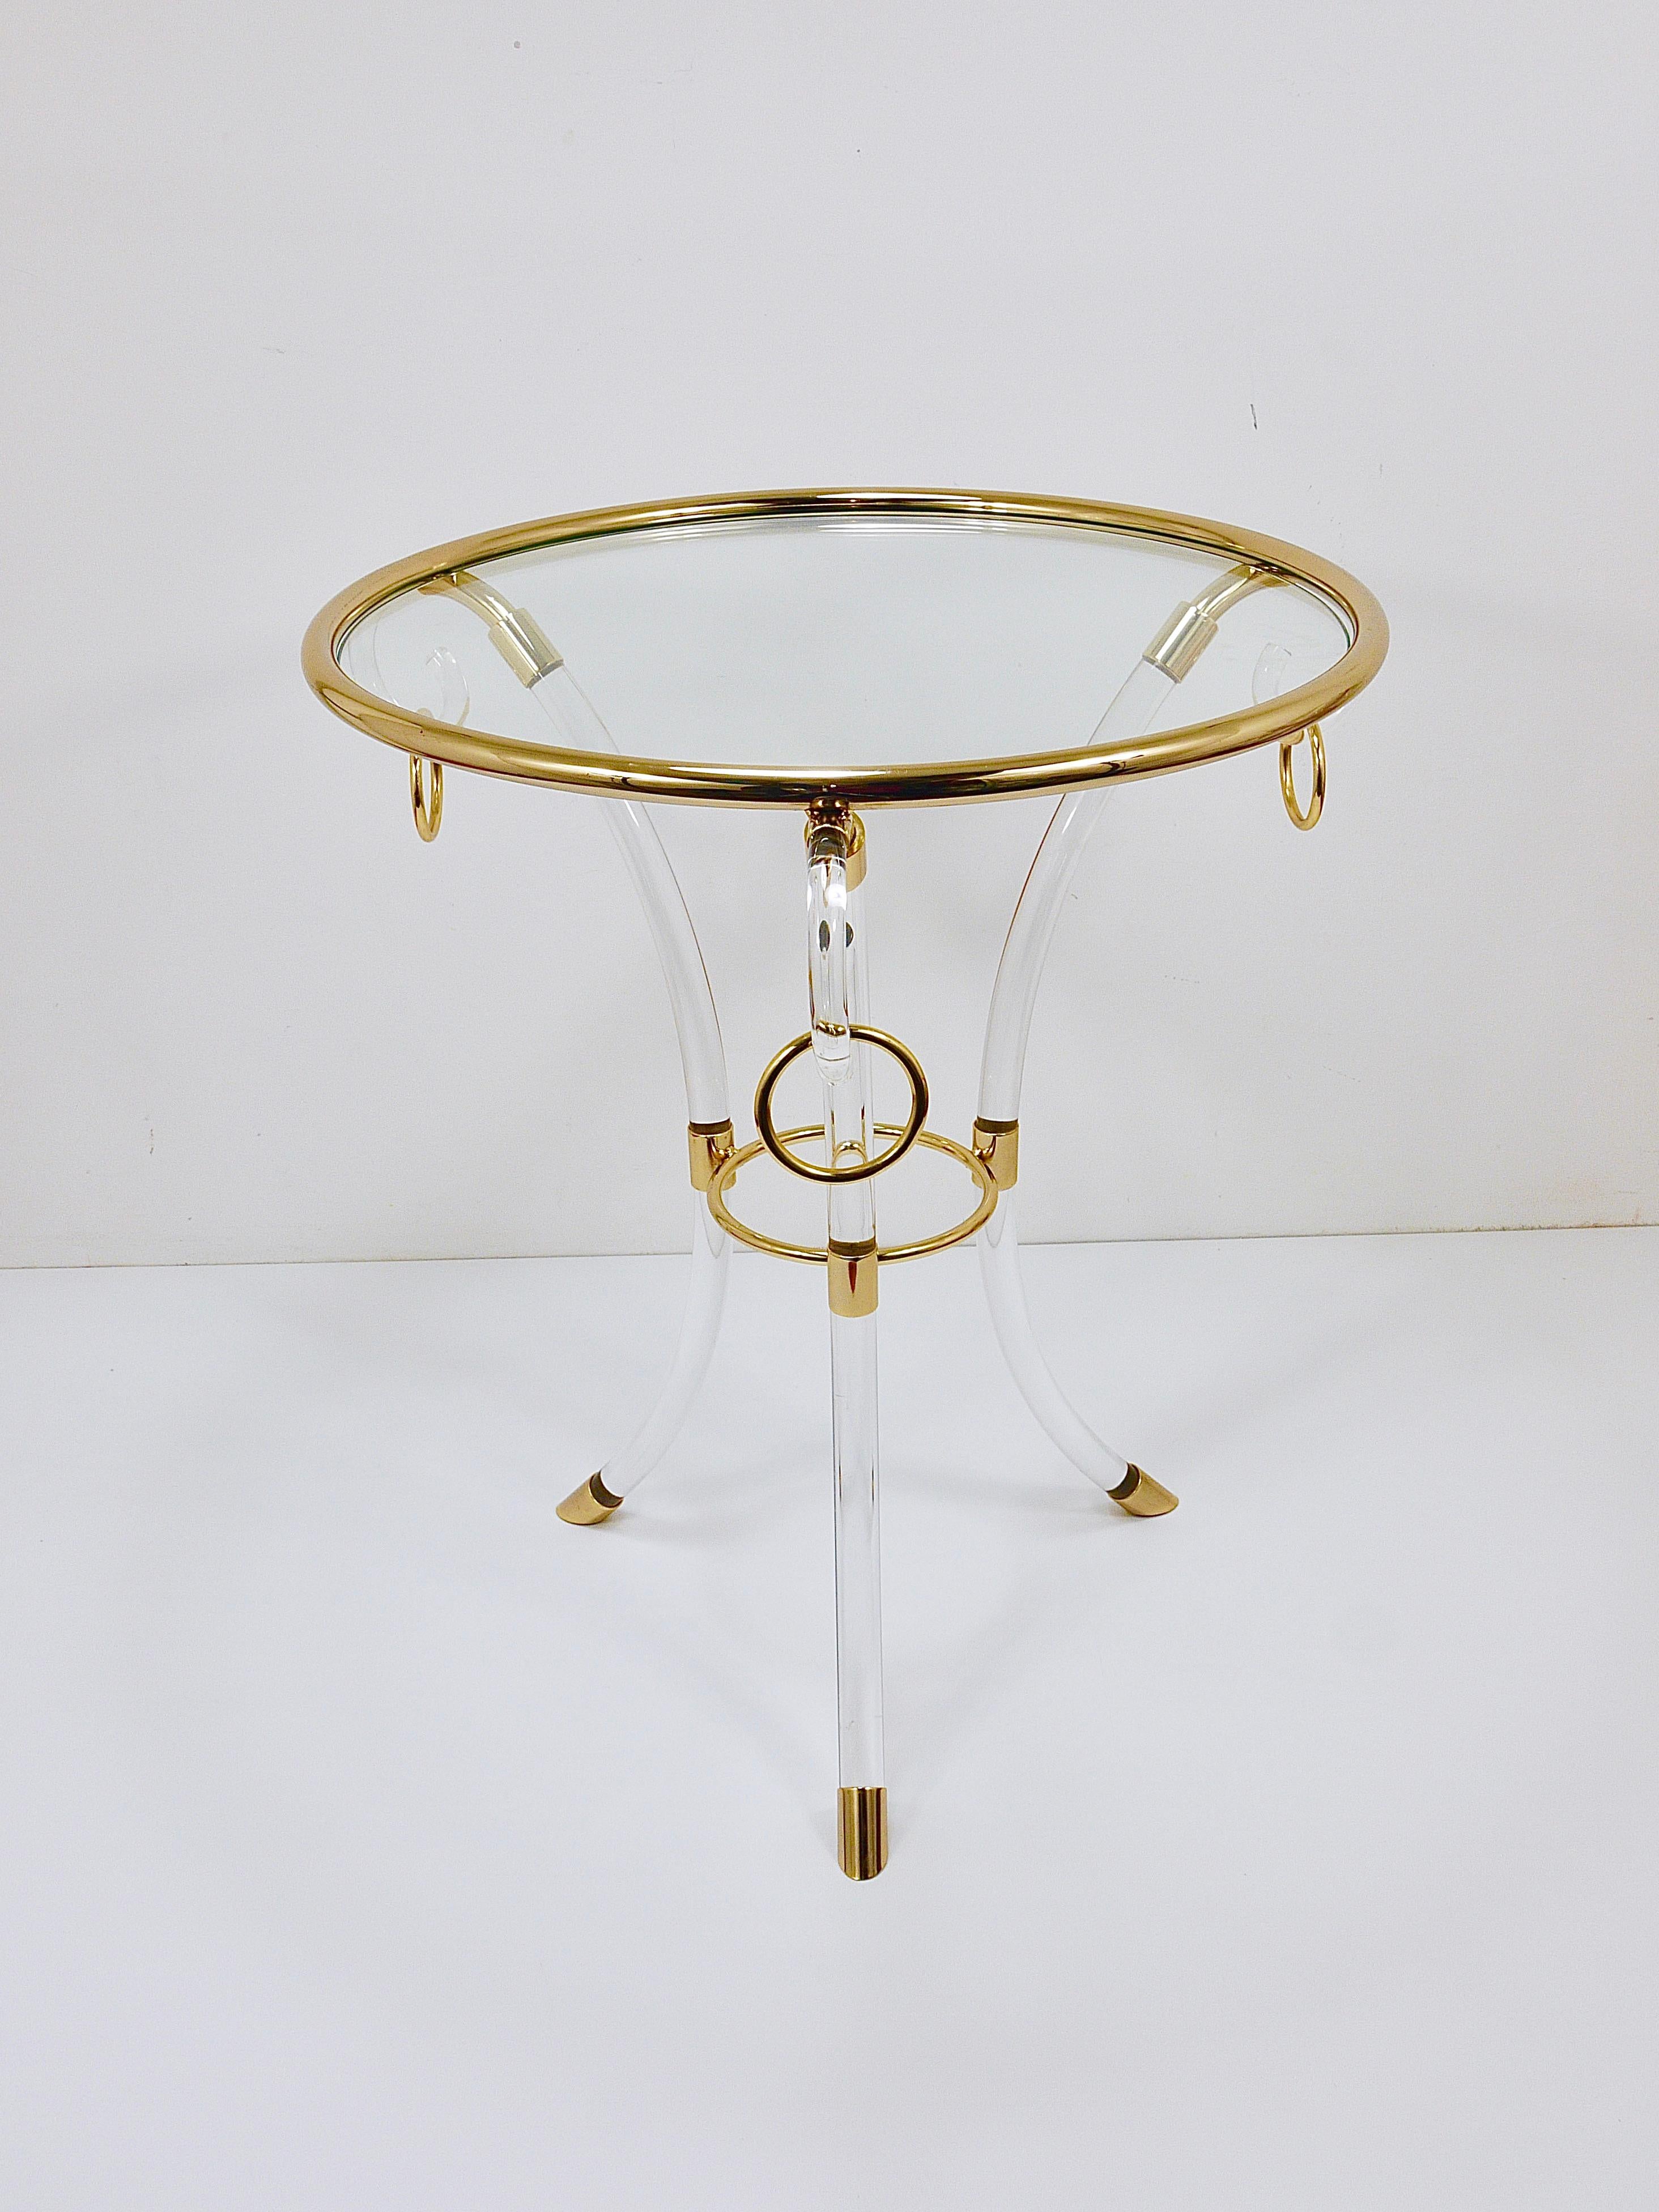 Maison Jansen Style Lucite & Gilt Metal Tripod Coffee Table Pedestal Gueridon For Sale 6